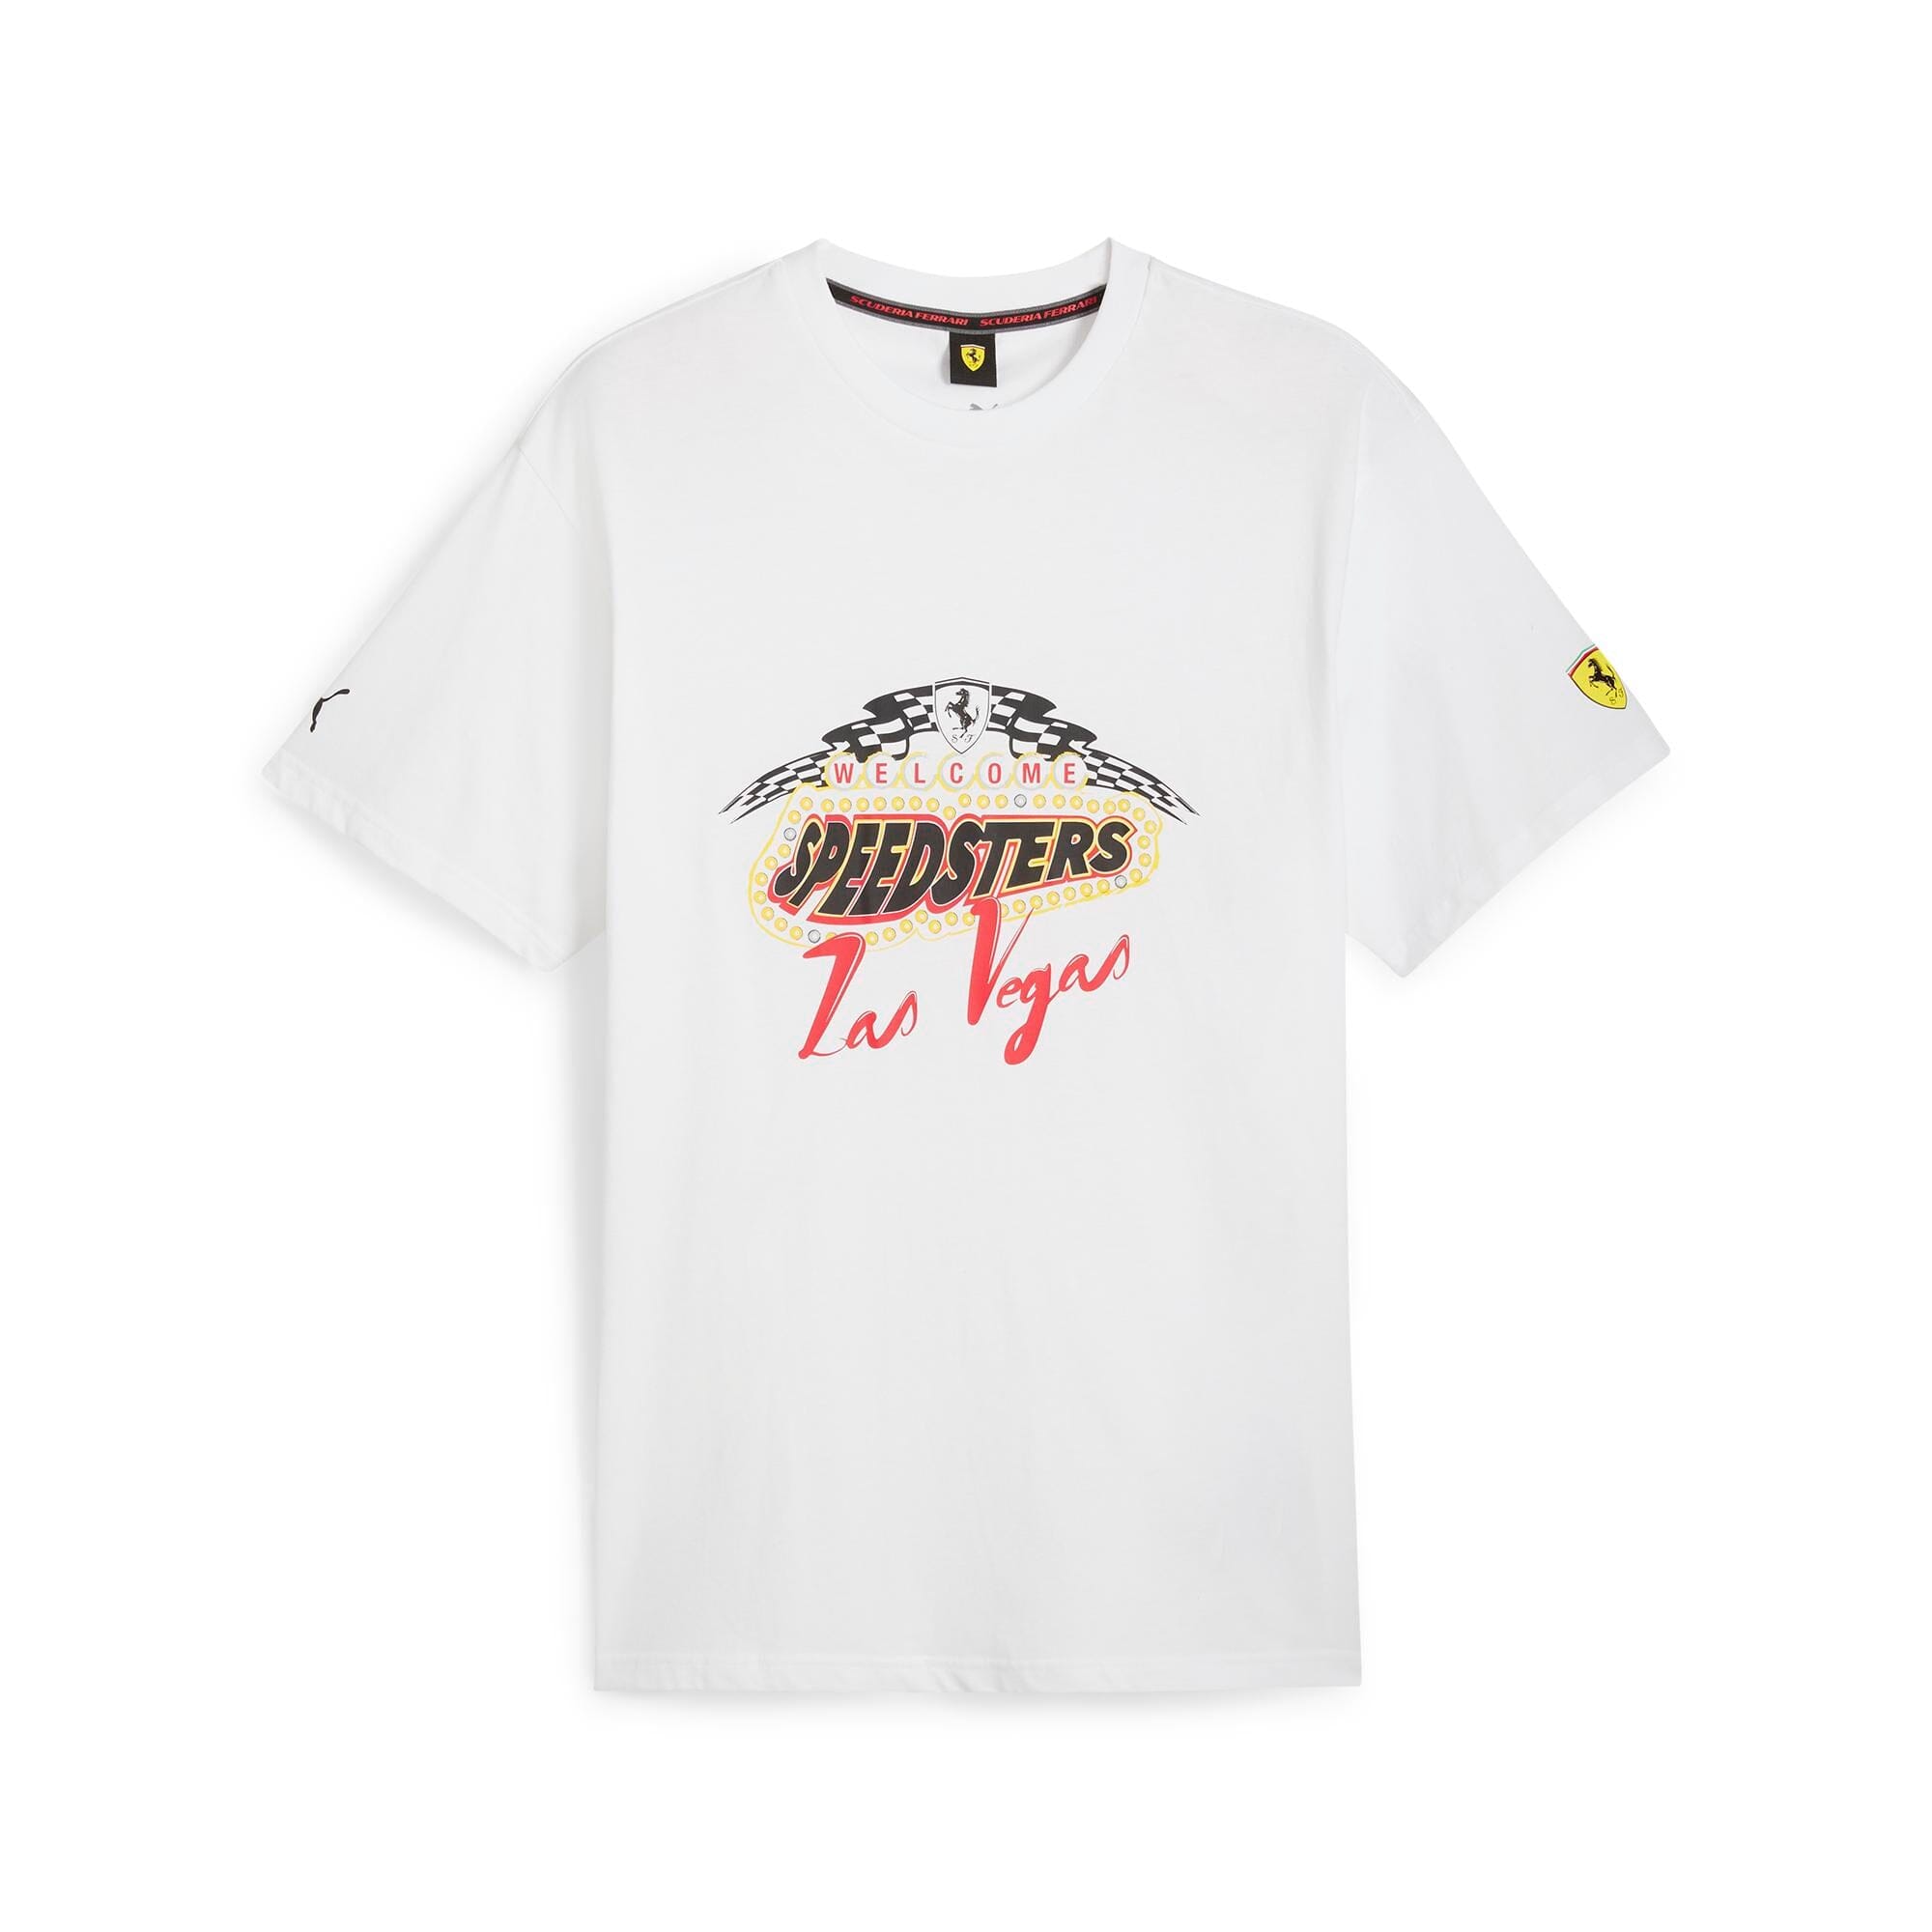 Special Edition Las Vegas GP T-Shirt - Black/White/Red